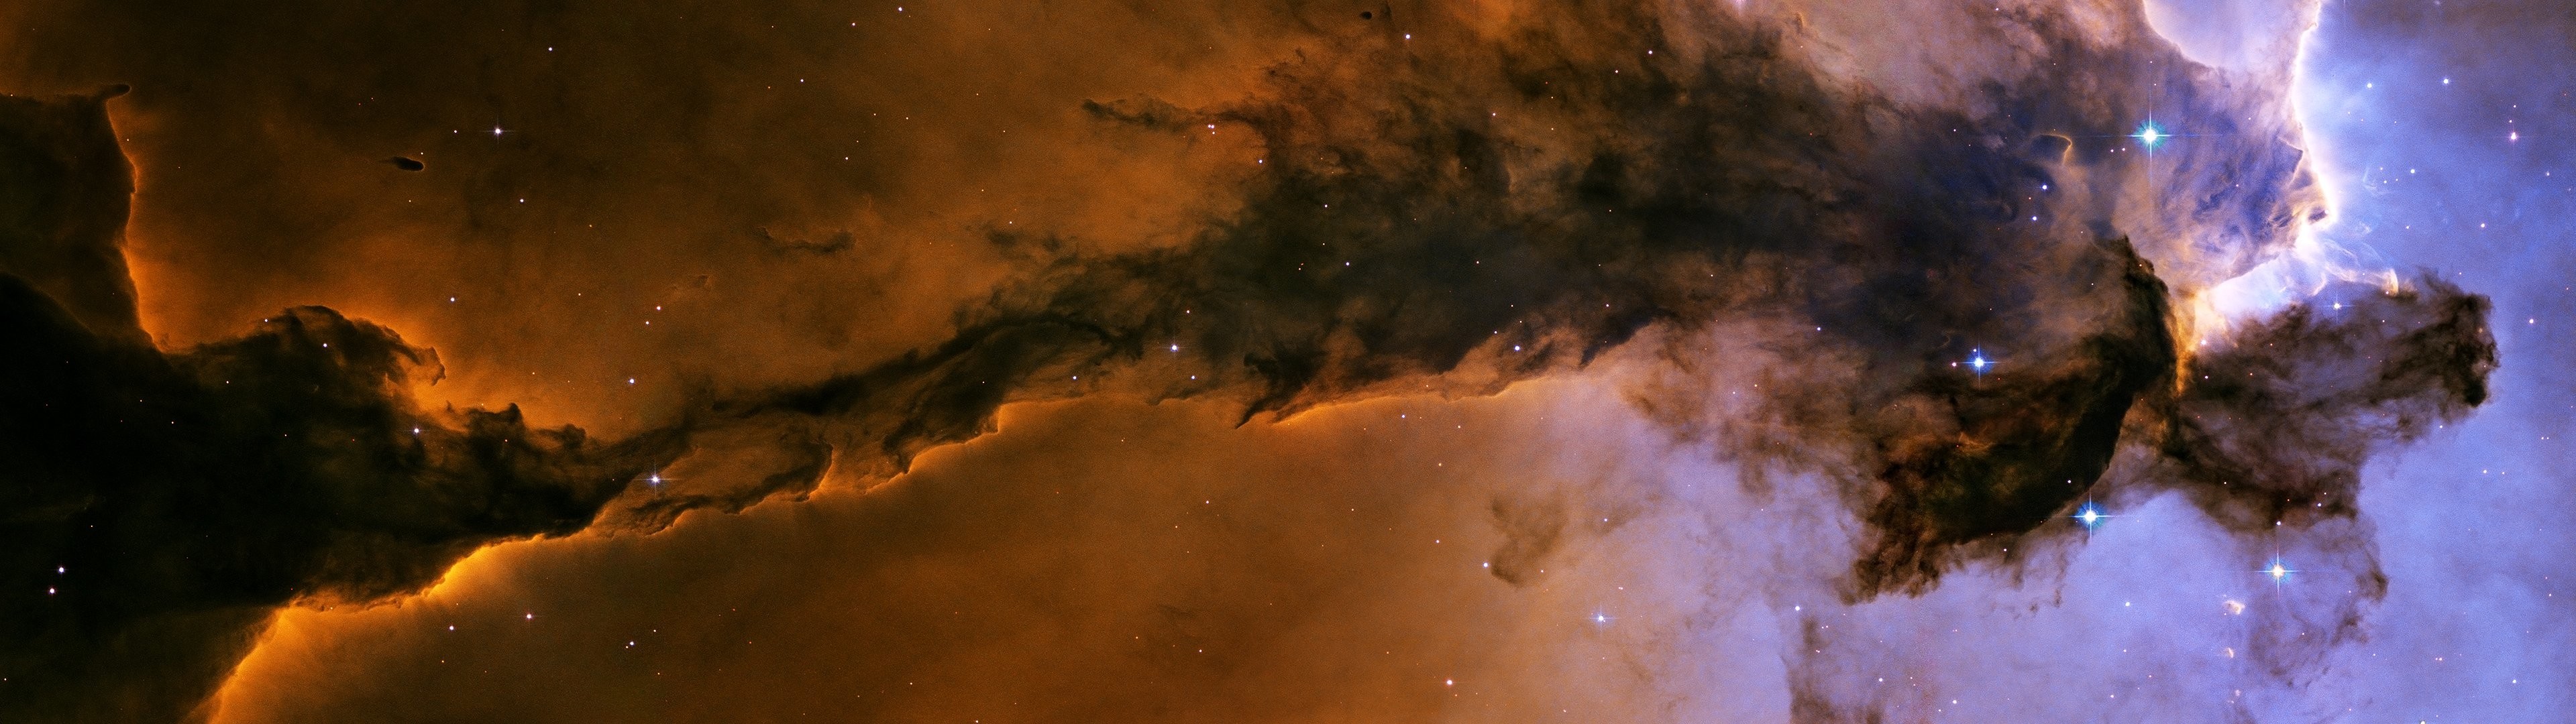 3840x1080 Outer space stars nebulae Eagle nebula wallpaper |  | 304674 |  WallpaperUP